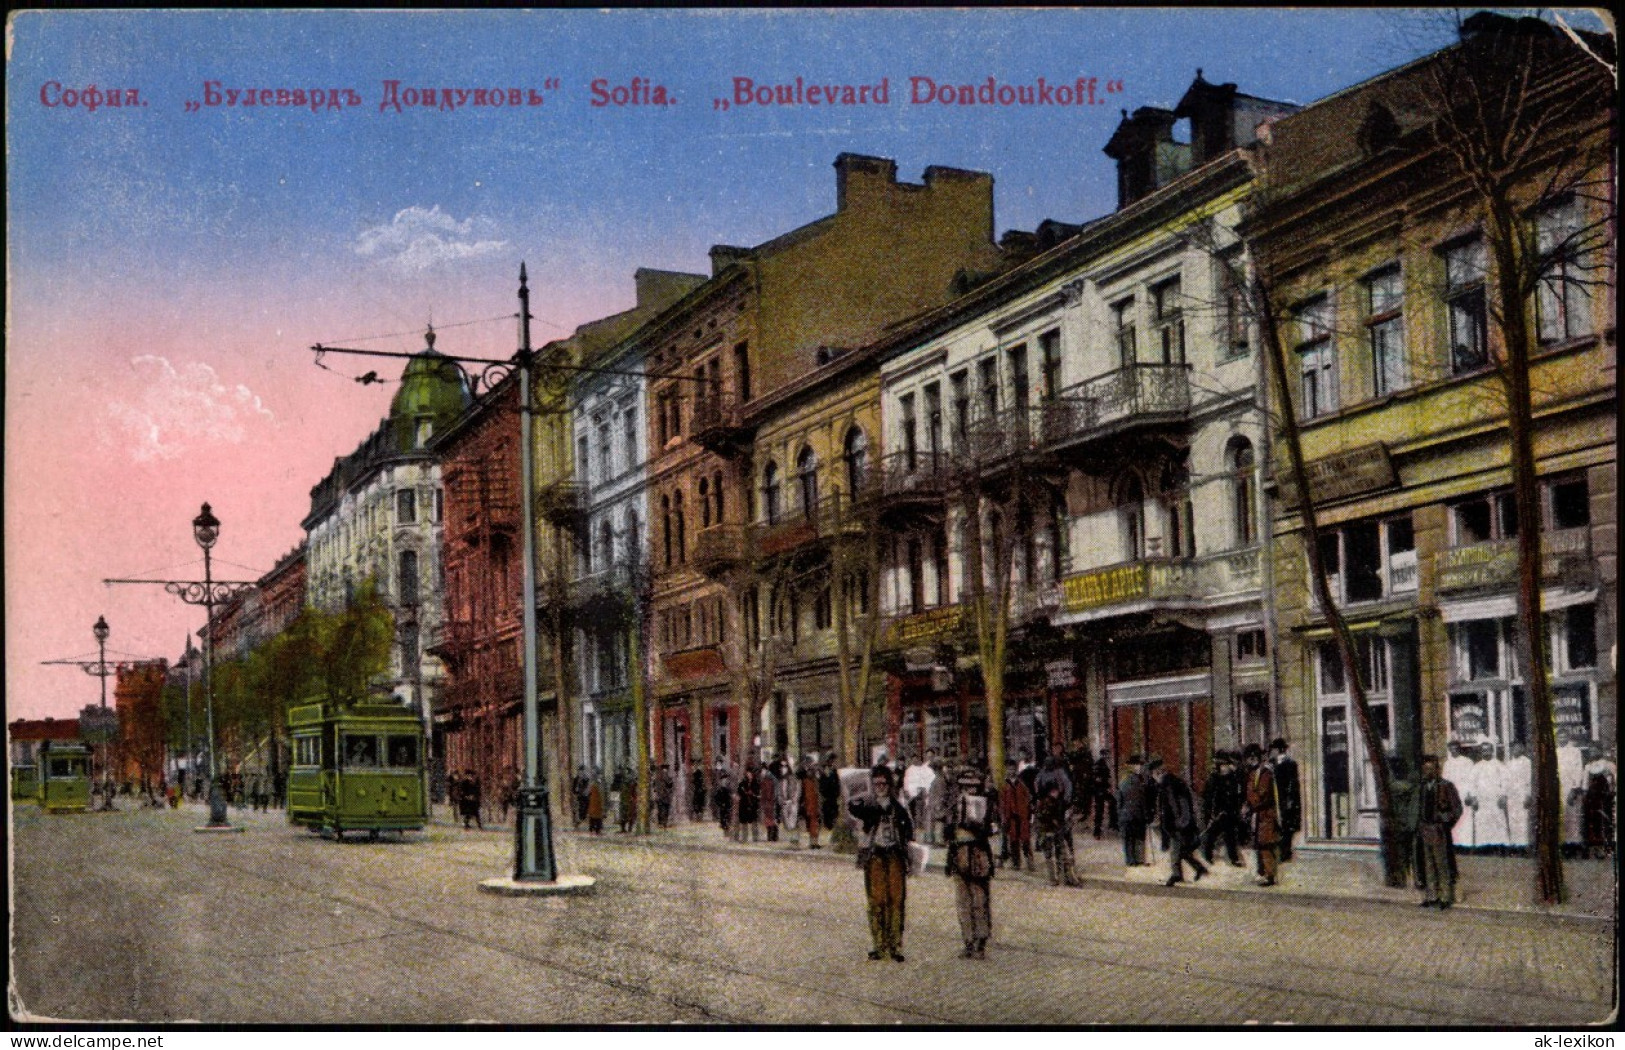 Sofia София ,,Булевардъ Дондуковь" Boulevard Dondoukoff" 1914 - Bulgarie